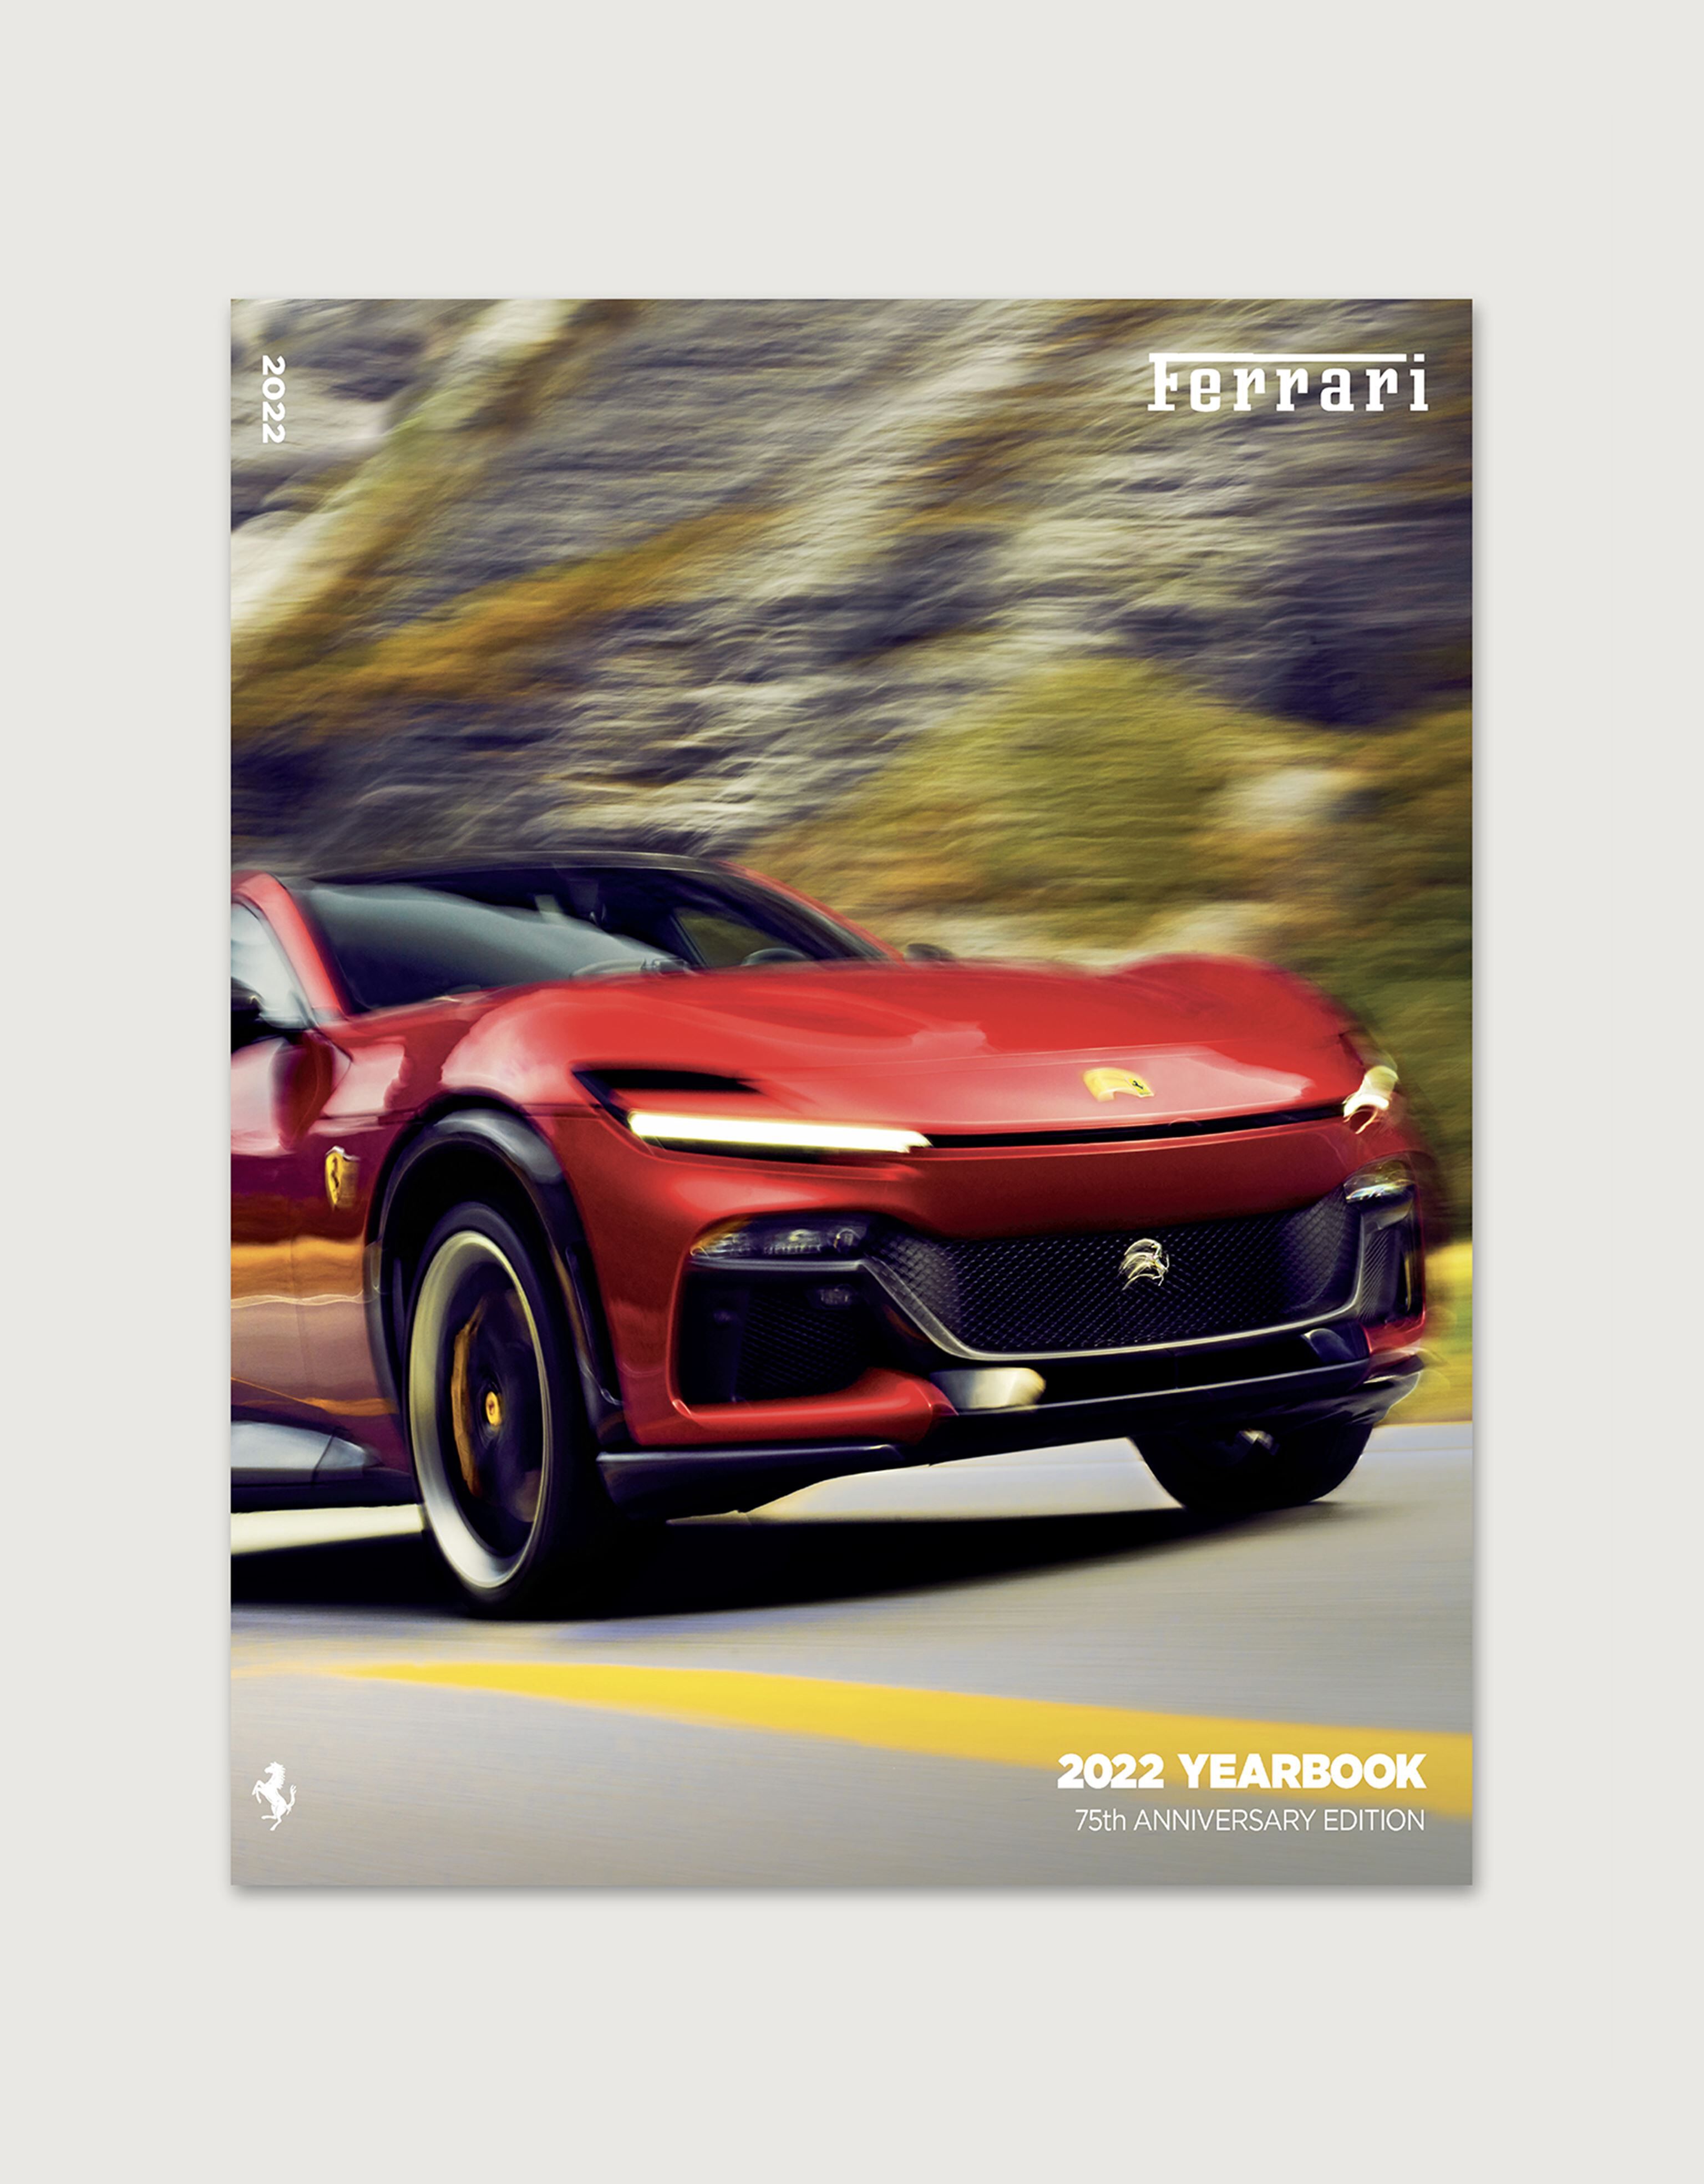 Ferrari The Official Ferrari Magazine Issue 57 - 2022 Yearbook 多色 48129f